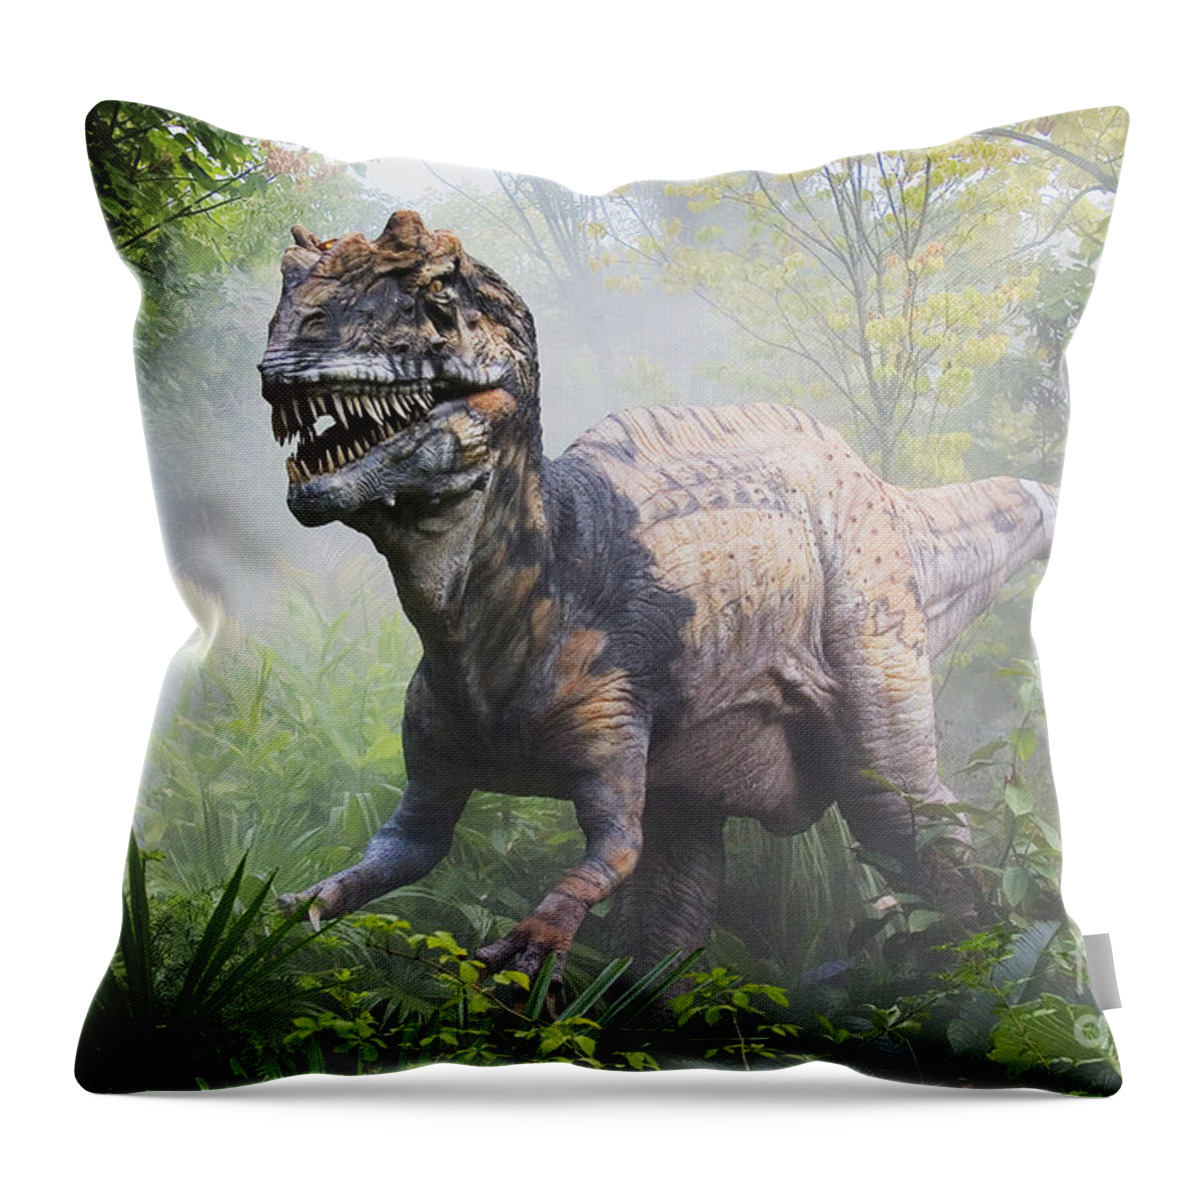 Dinosaur Throw Pillow featuring the photograph Metriacanthosaurus by David Davis and Photo Researchers